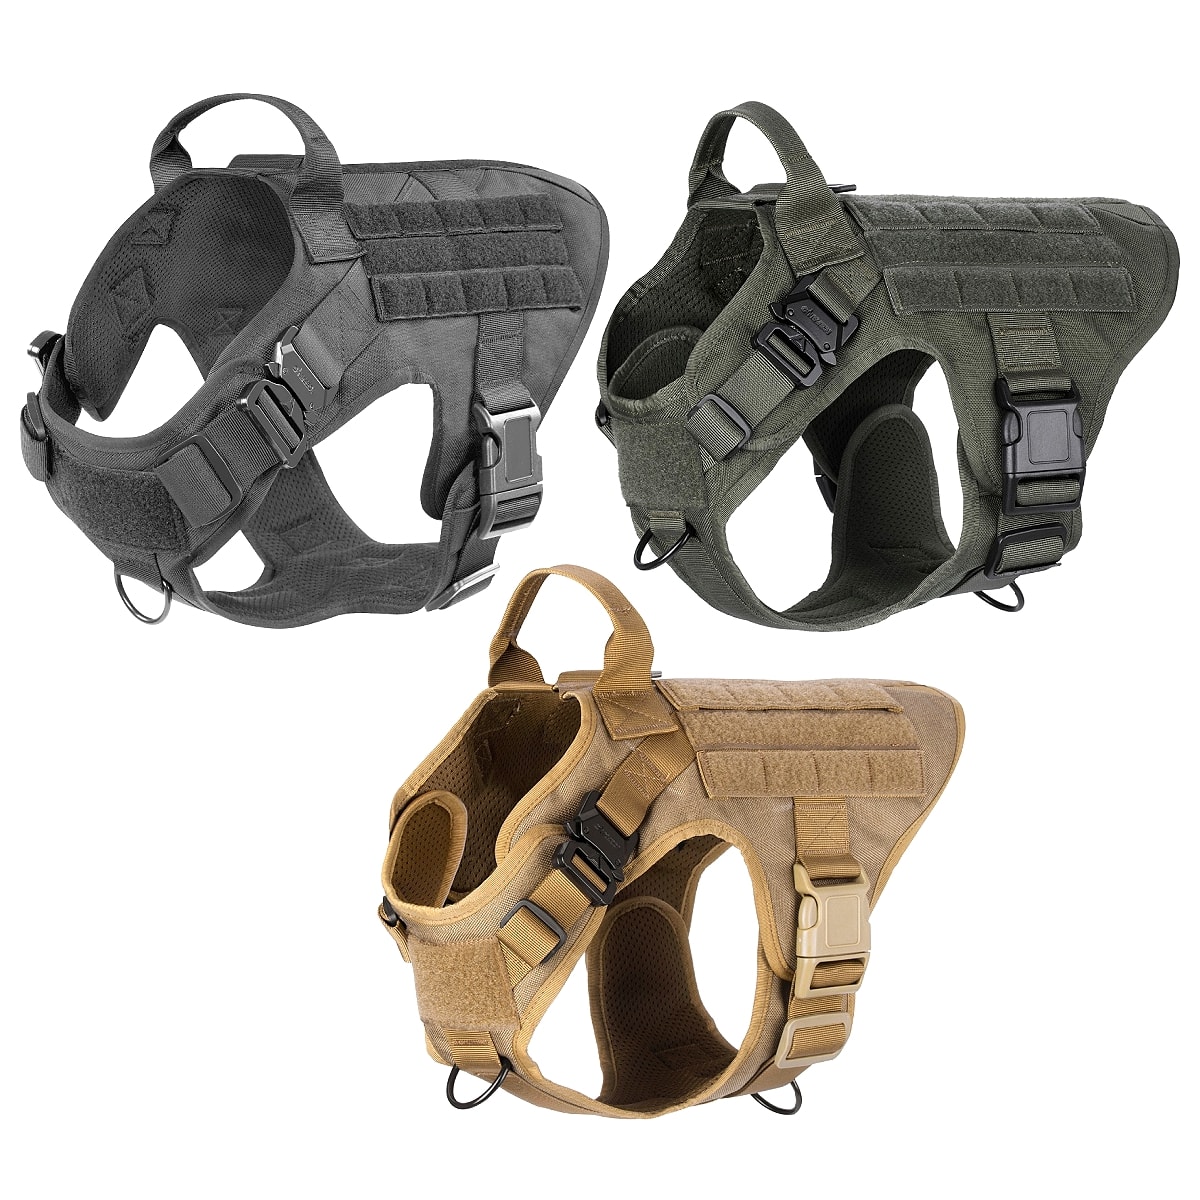   ! S3F! 5TCY [Military Tactical Molle Vest Dog Harness] ~^[^NeBJ[xXg hbOn[lX! y  K9 A[~[ [VXe p  [ht\ ^ ^ ^ hbO oCJ[ ToQ[ Mtg!